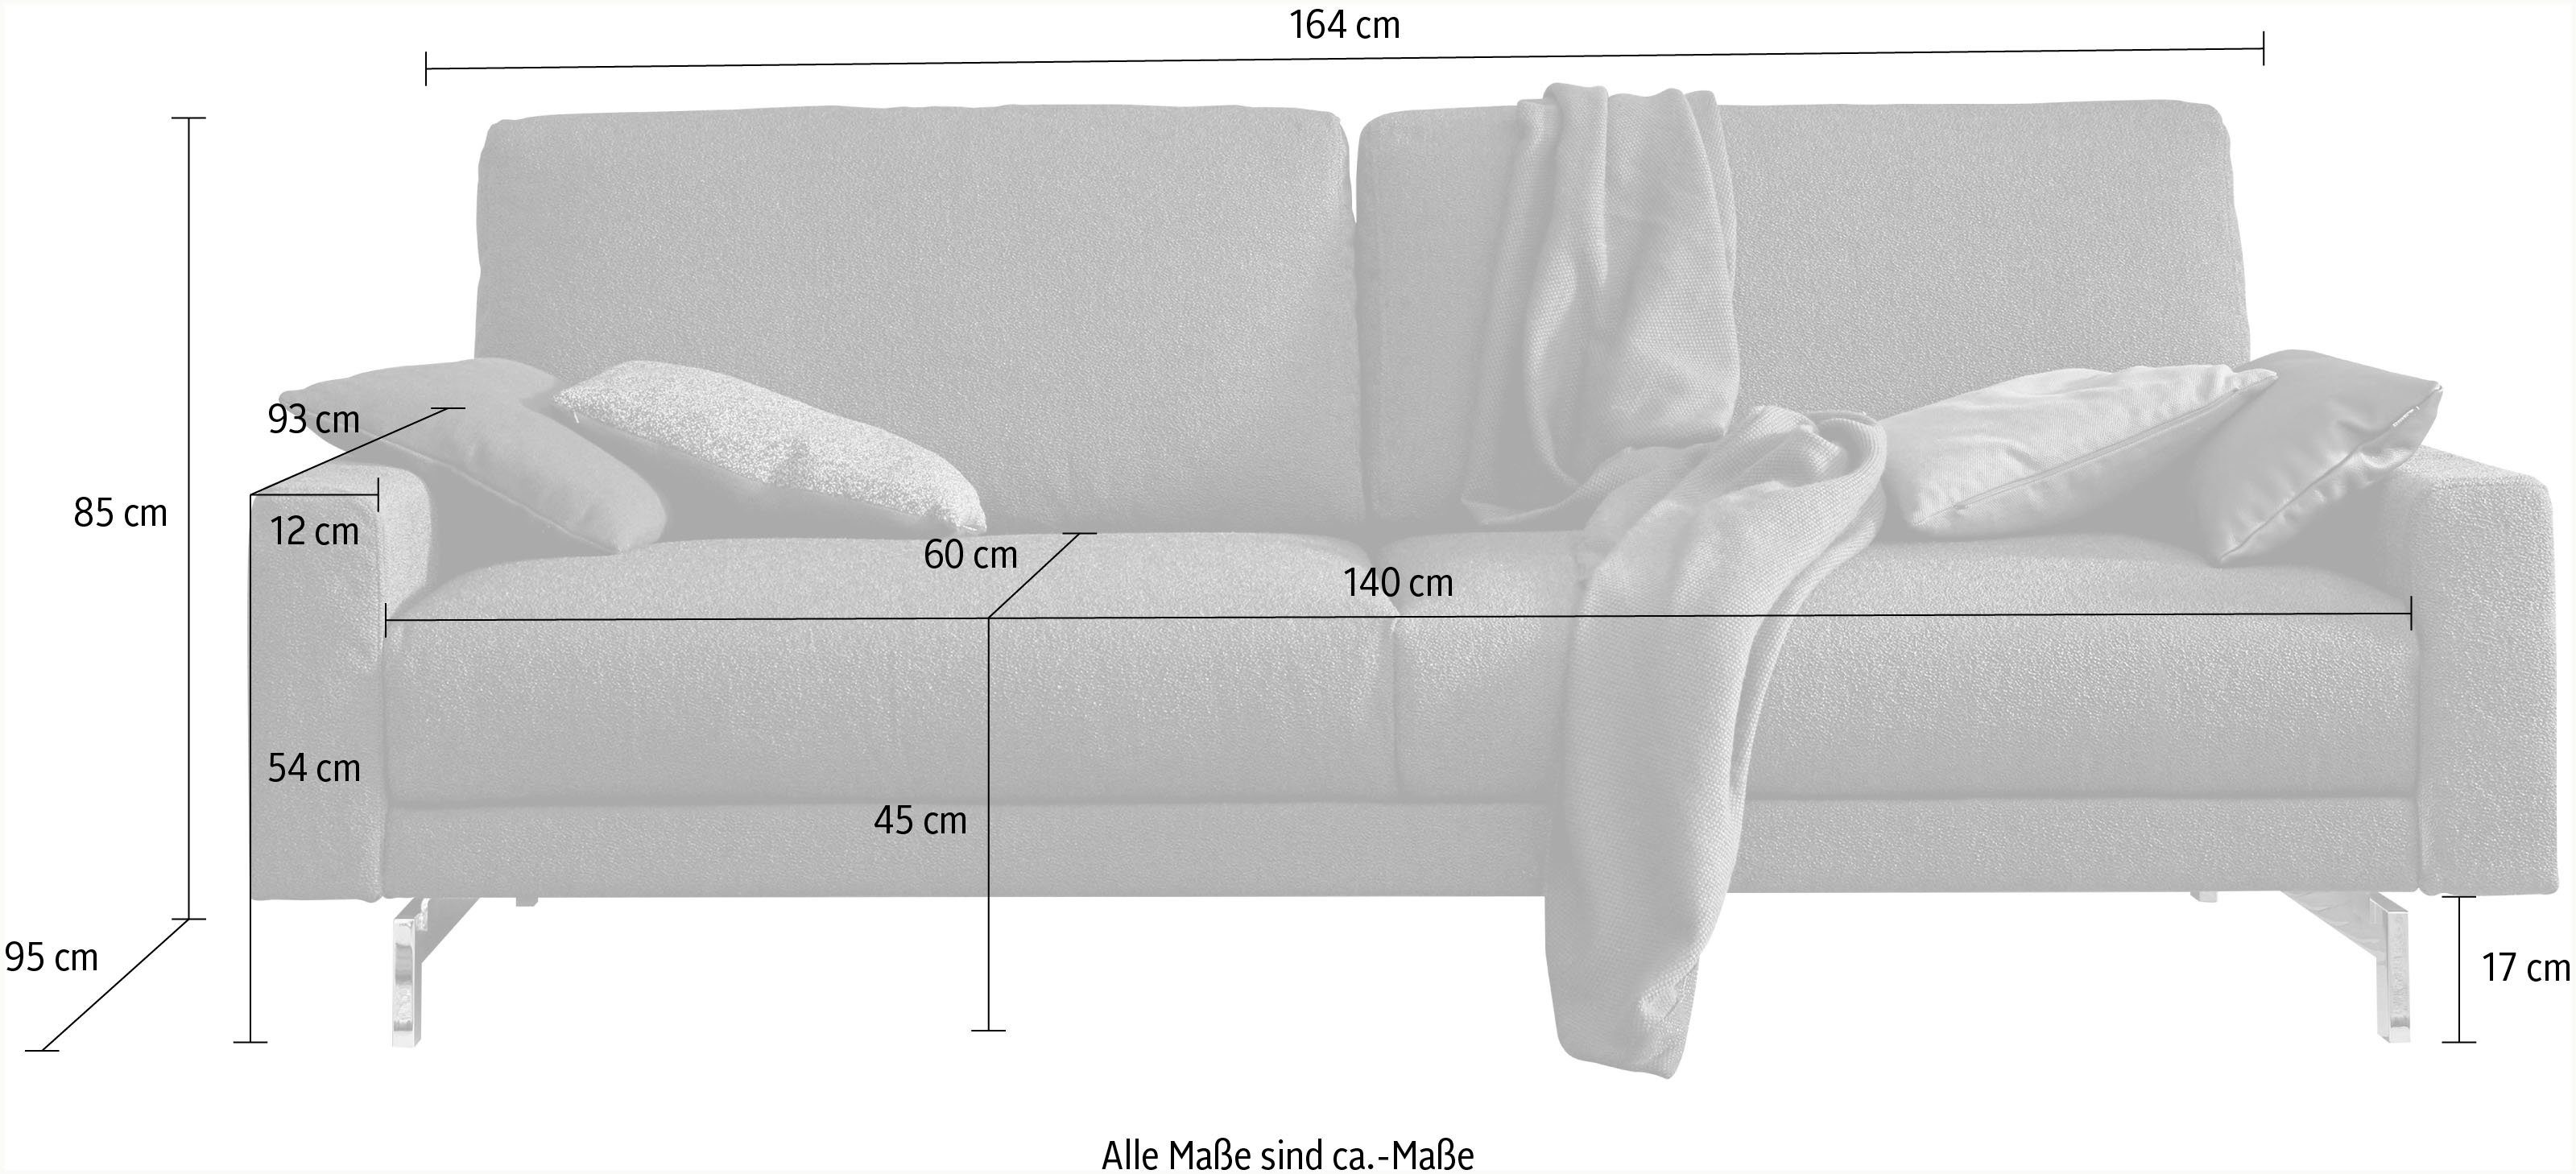 sofa glänzend, hs.450, cm 164 chromfarben 2-Sitzer Breite niedrig, hülsta Armlehne Fuß